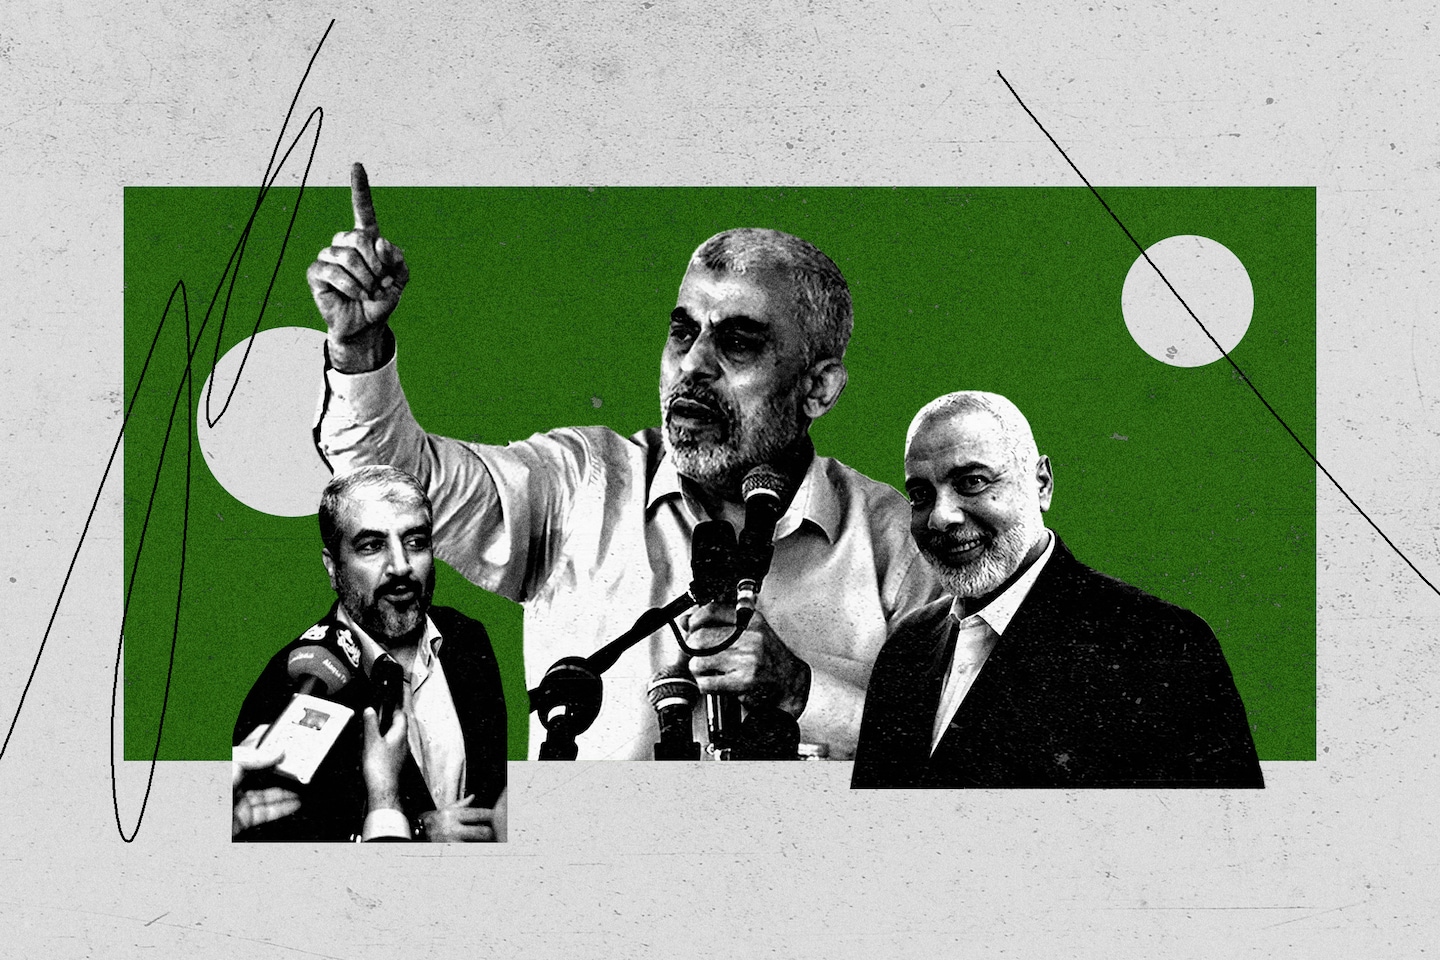 Hamas’s top leaders include Yehiya Sinwar, Ismail Haniyeh and Mohammed Deif